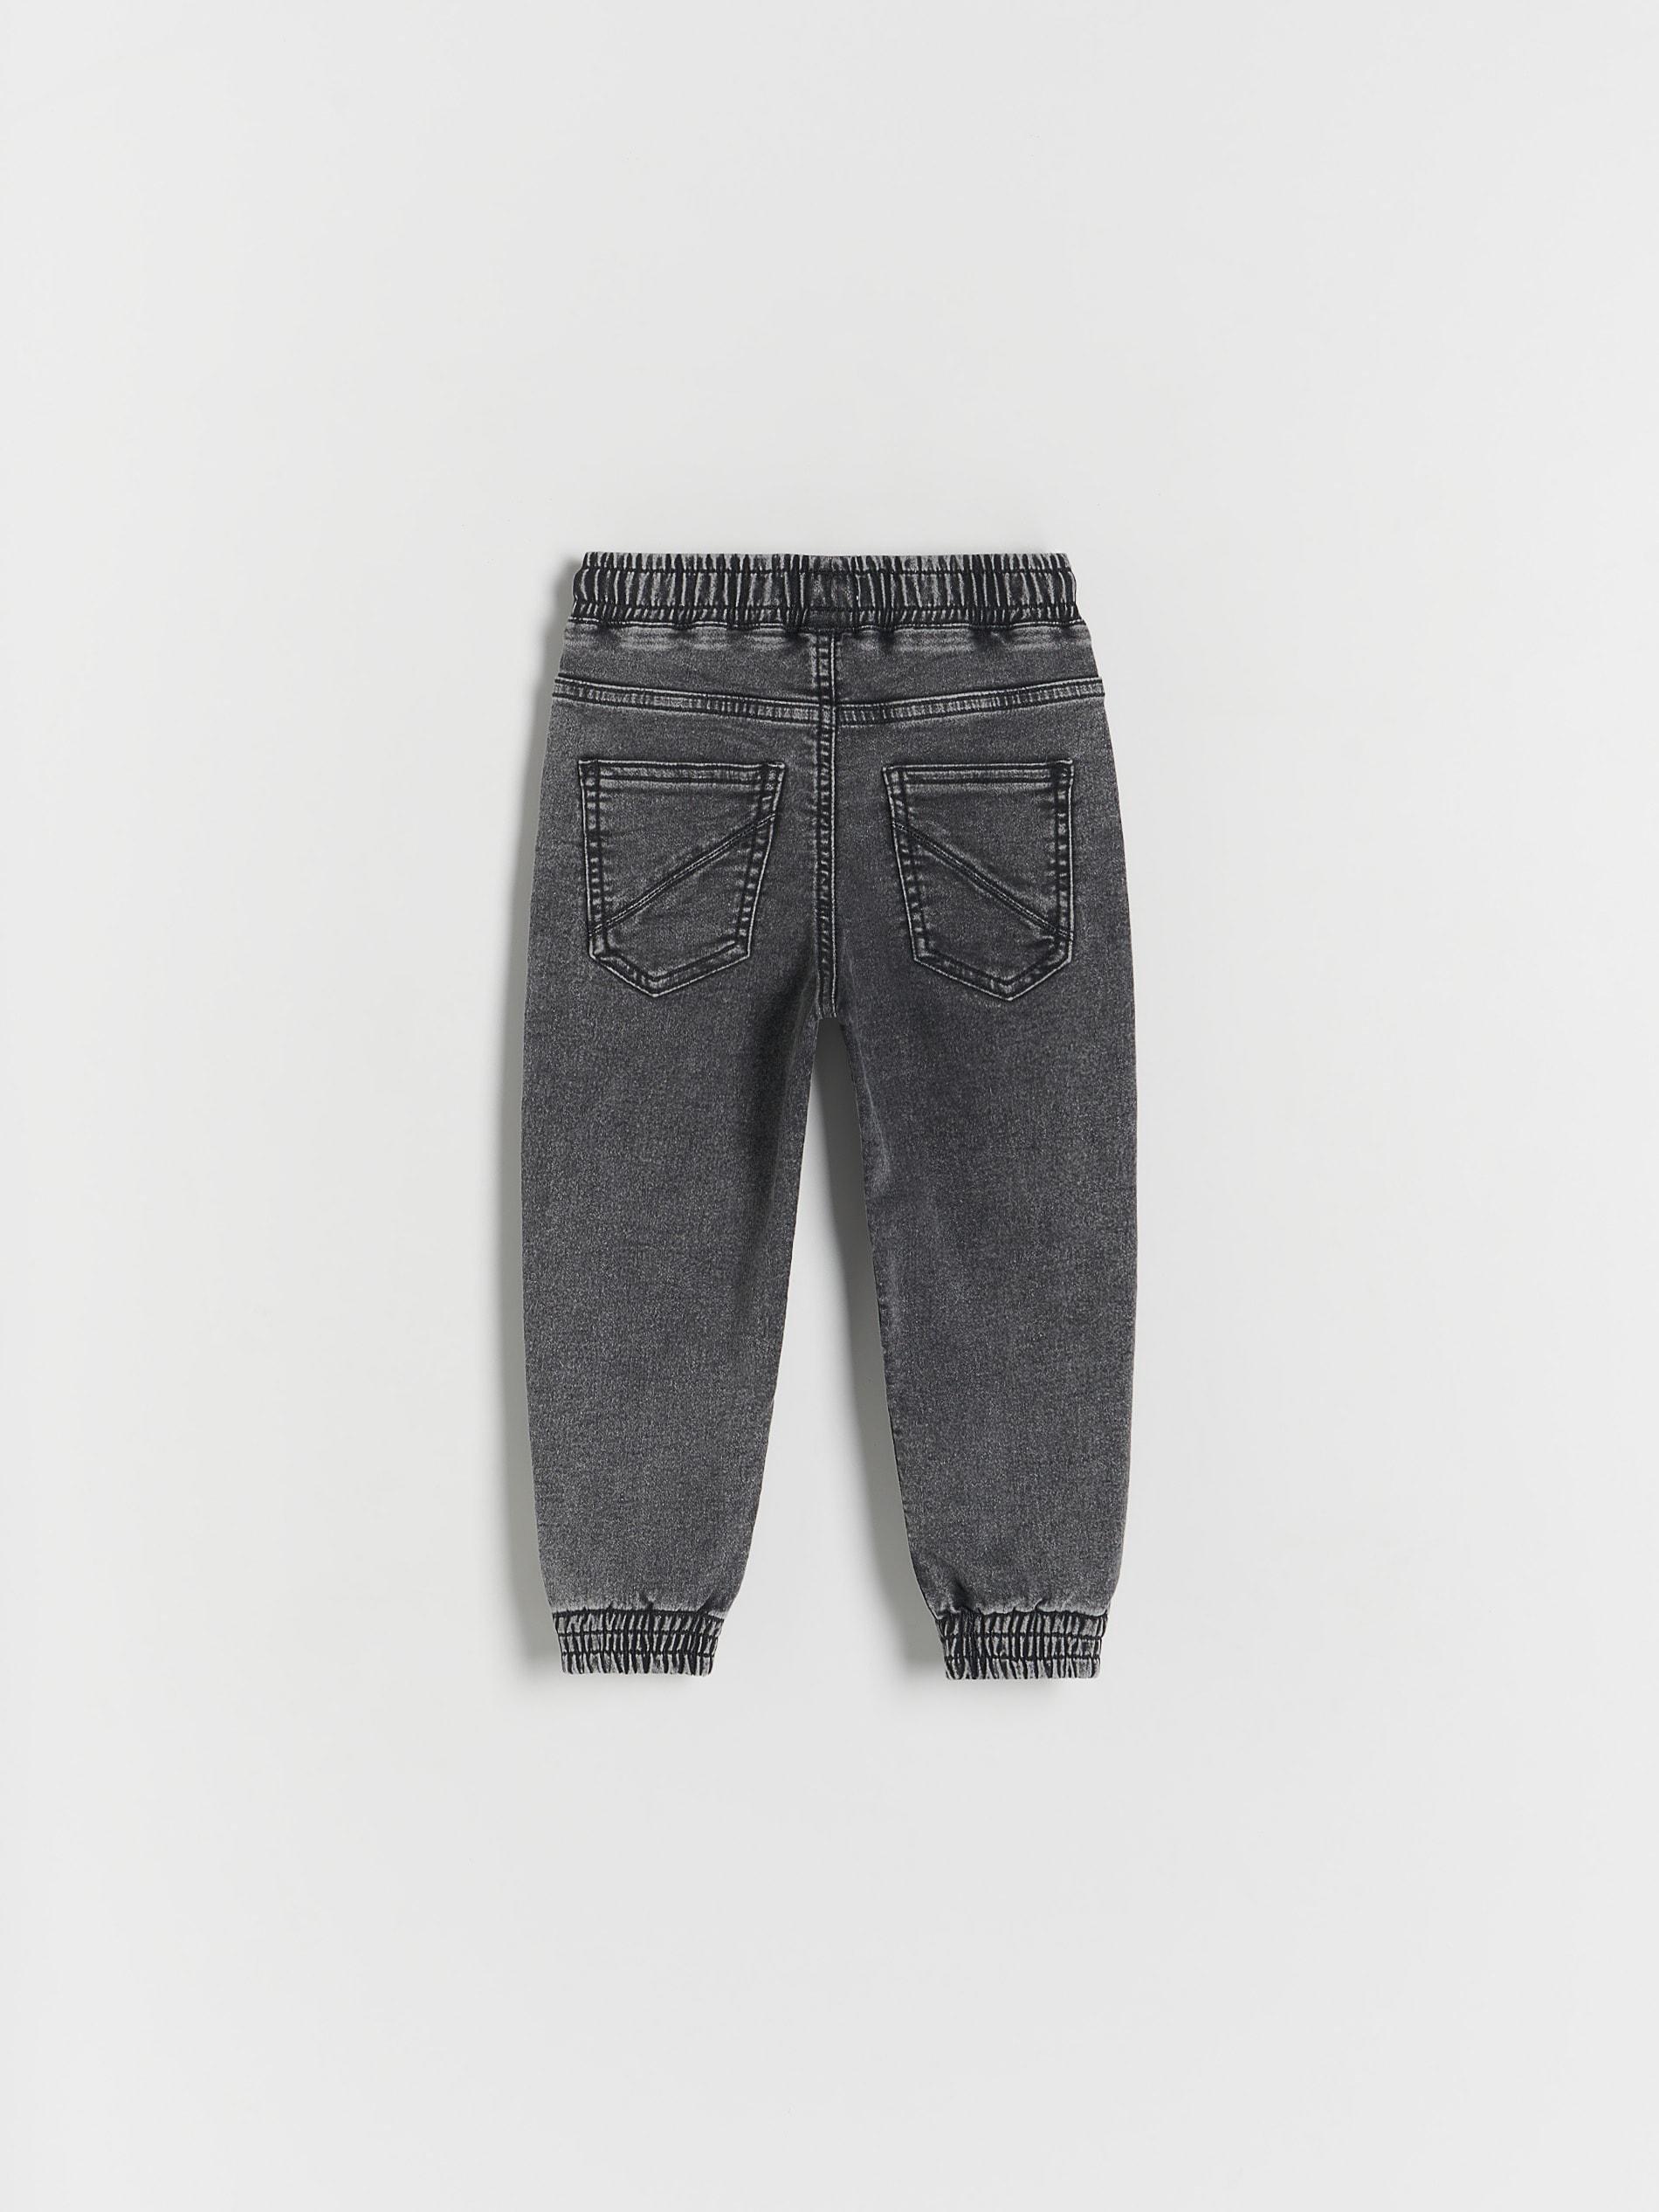 Reserved - Grey Elastic Jogger Jeans, Kids Boys